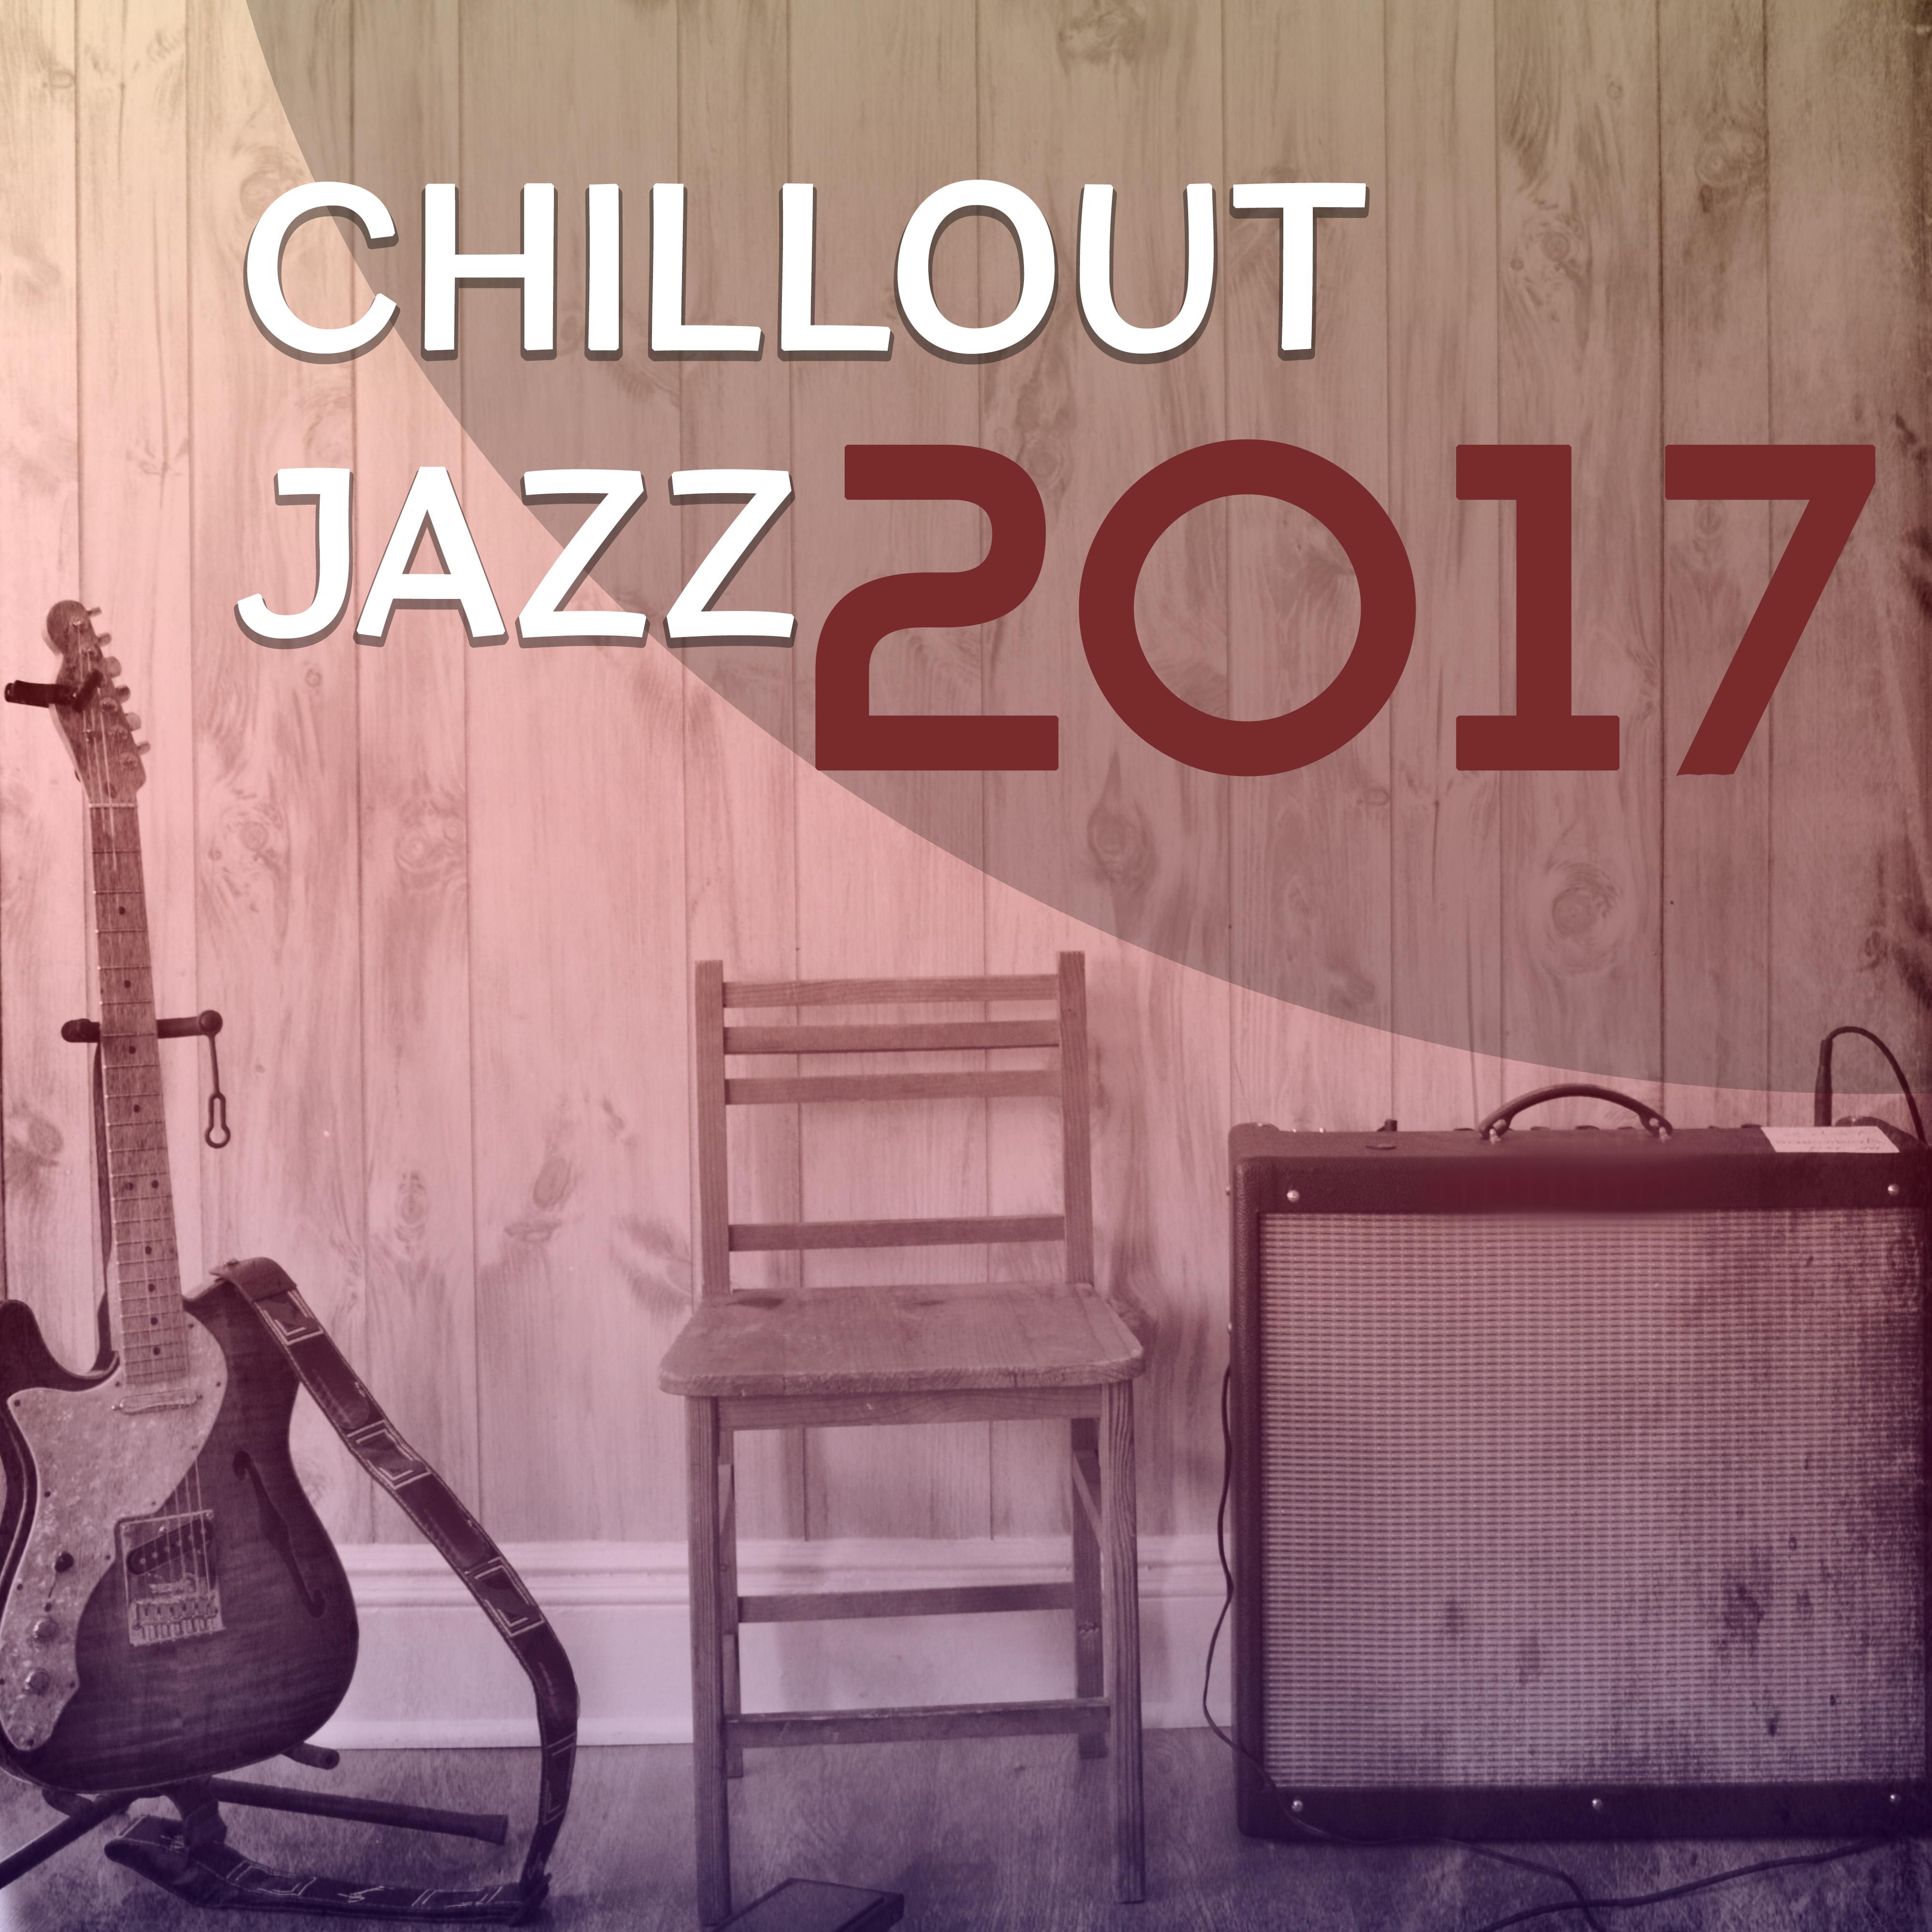 Chillout Jazz 2017  Best Jazz Album of 2017, Instrumental Jazz Session, Music for Jazz Club, Restaurant, Lounge, Relax